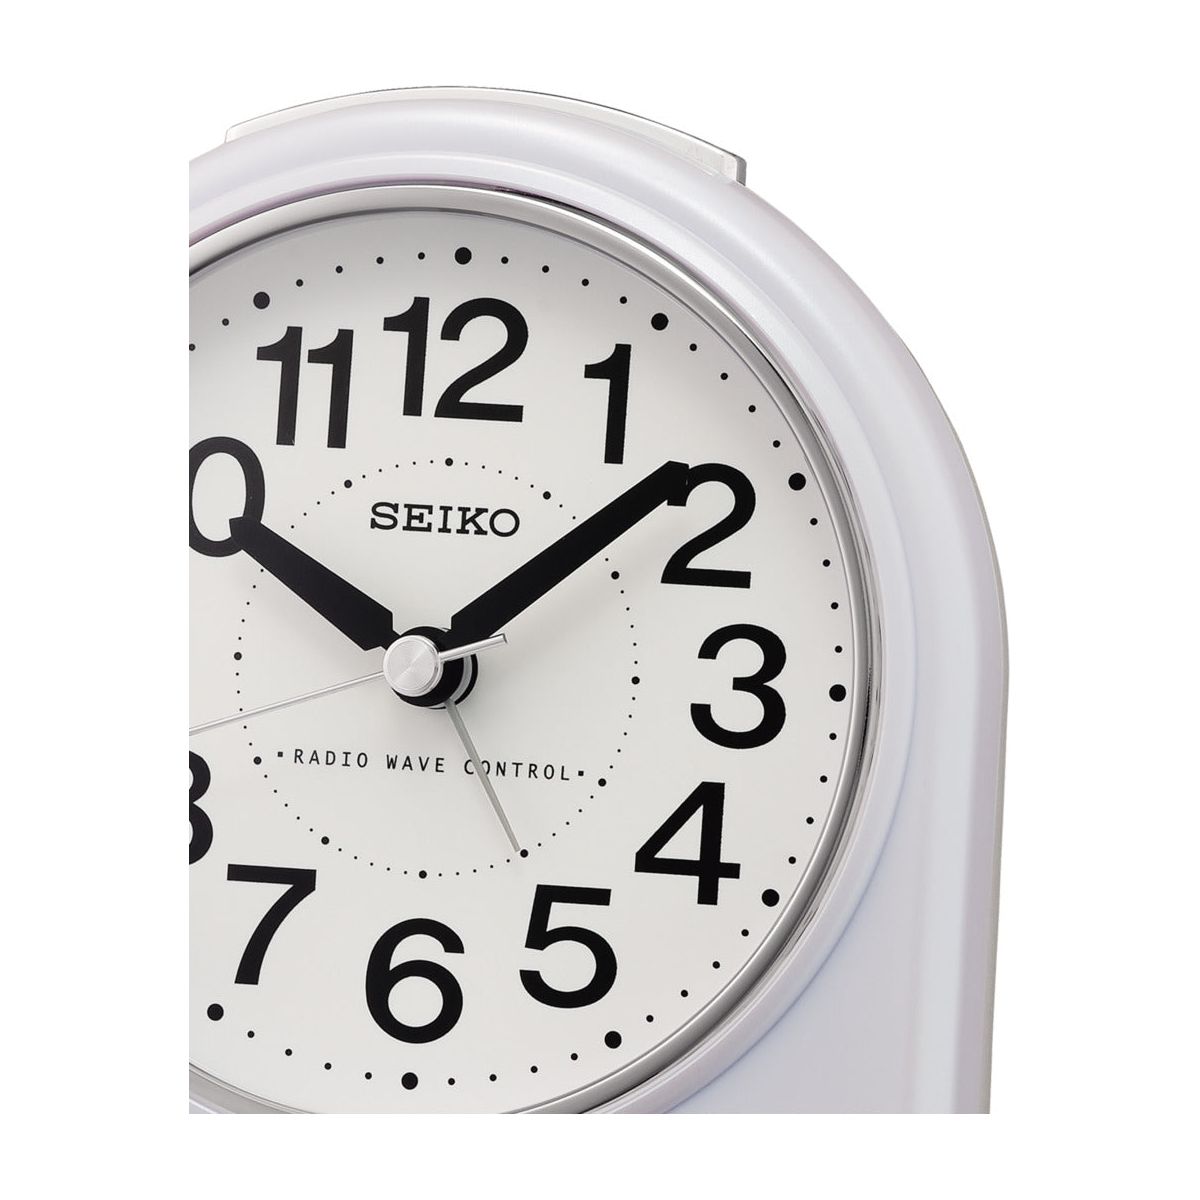 SEIKO CLOCKS SEIKO CLOCKS WATCHES Mod. QHR204W WATCHES seiko-clocks-watches-mod-qhr204w